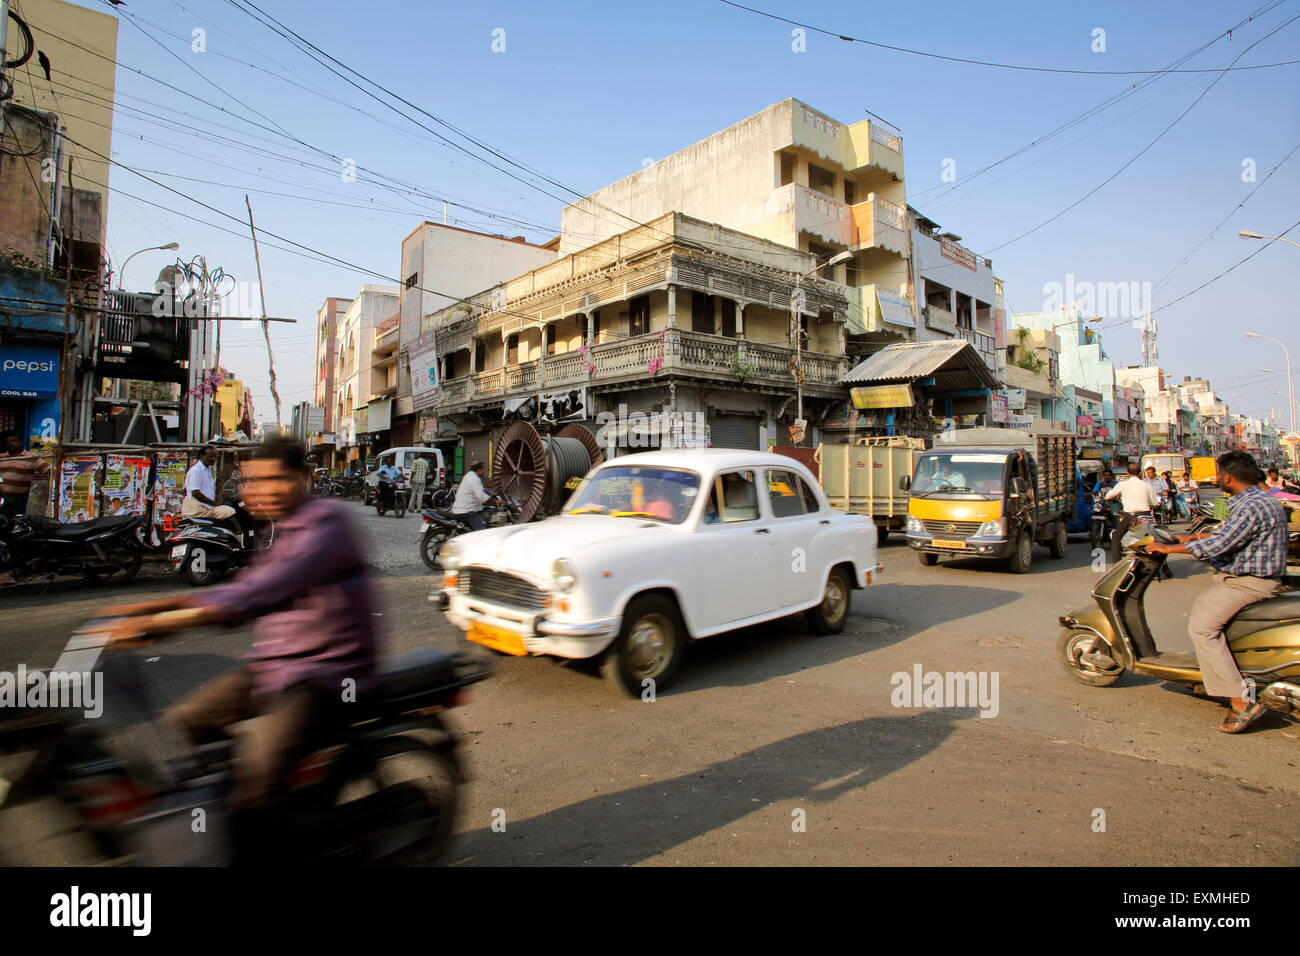 Busy street scene in Chennai, India Stock Photo